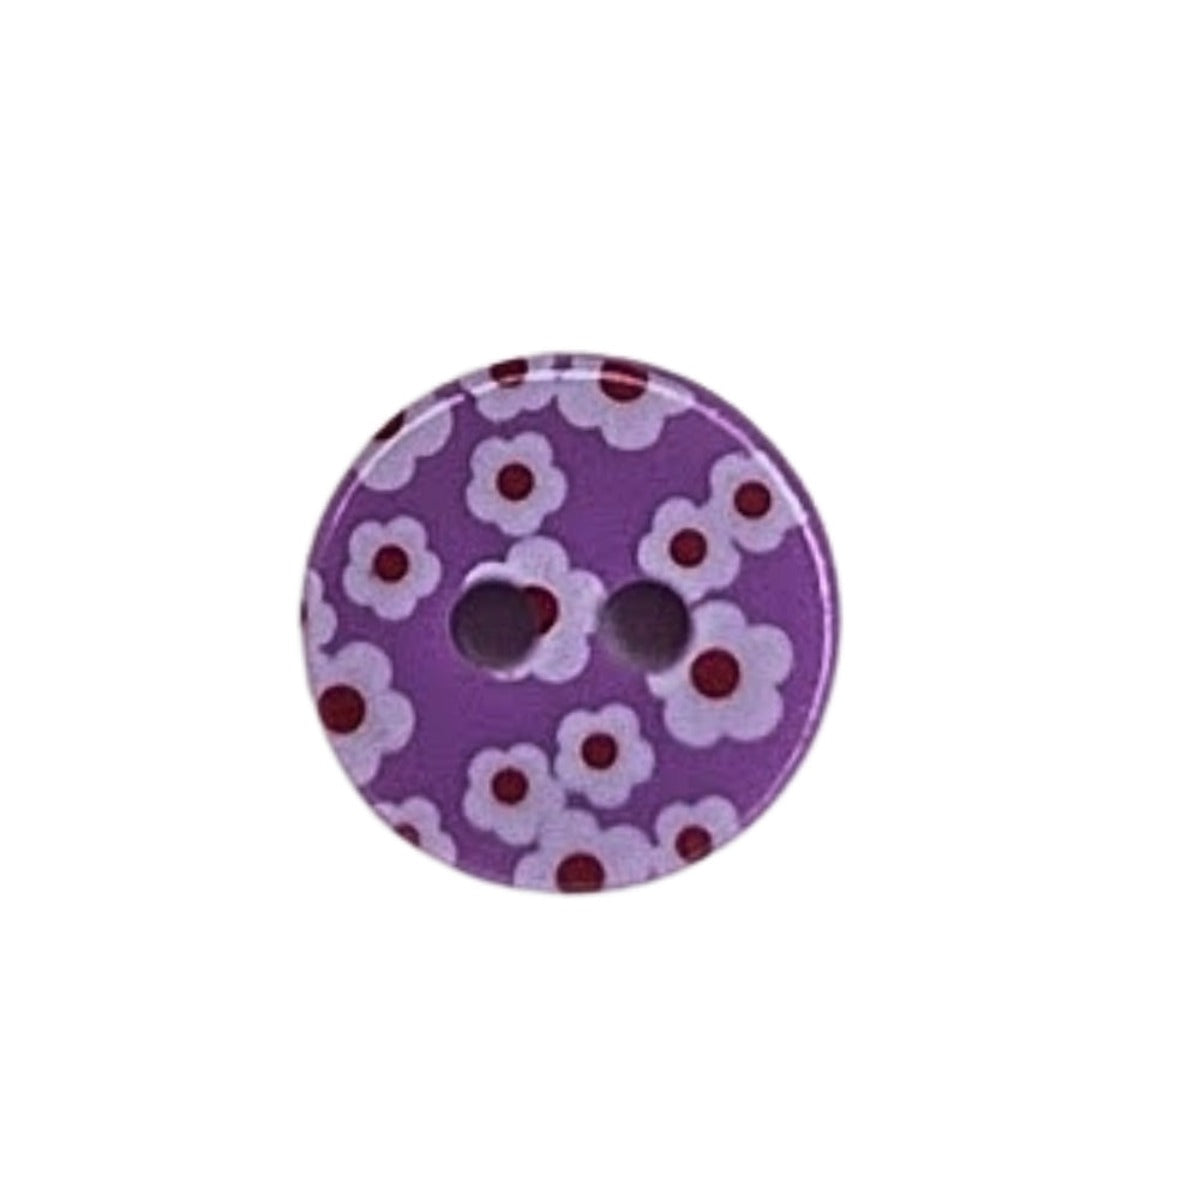 2 Hole Printed Flower Design Button - 12mm - Purple [LG29.5]